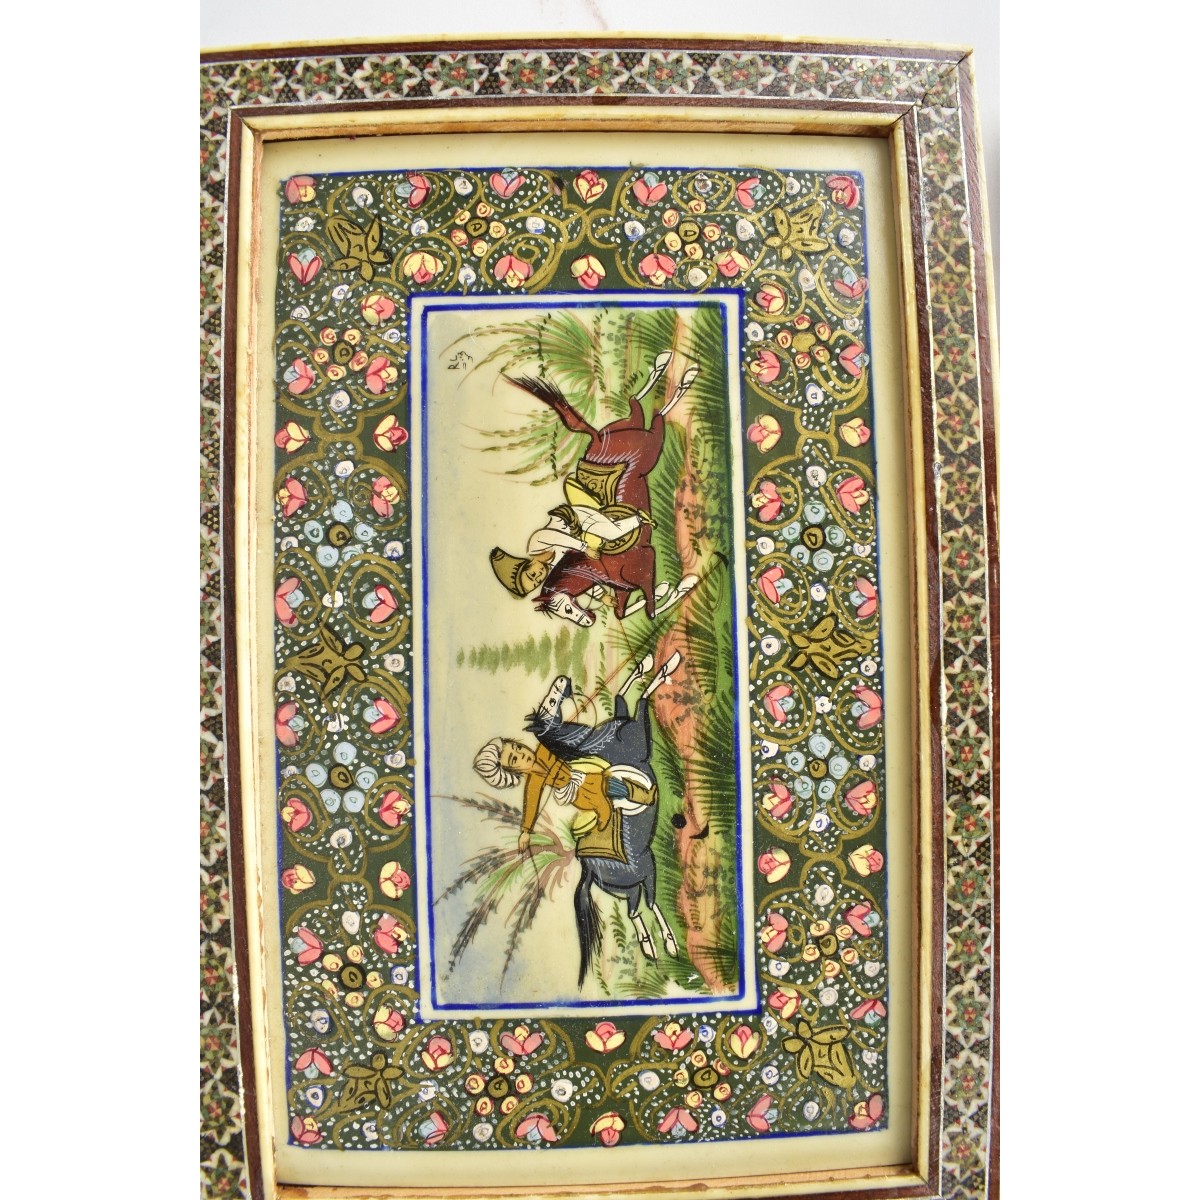 Four Persian Celluloid Miniatures